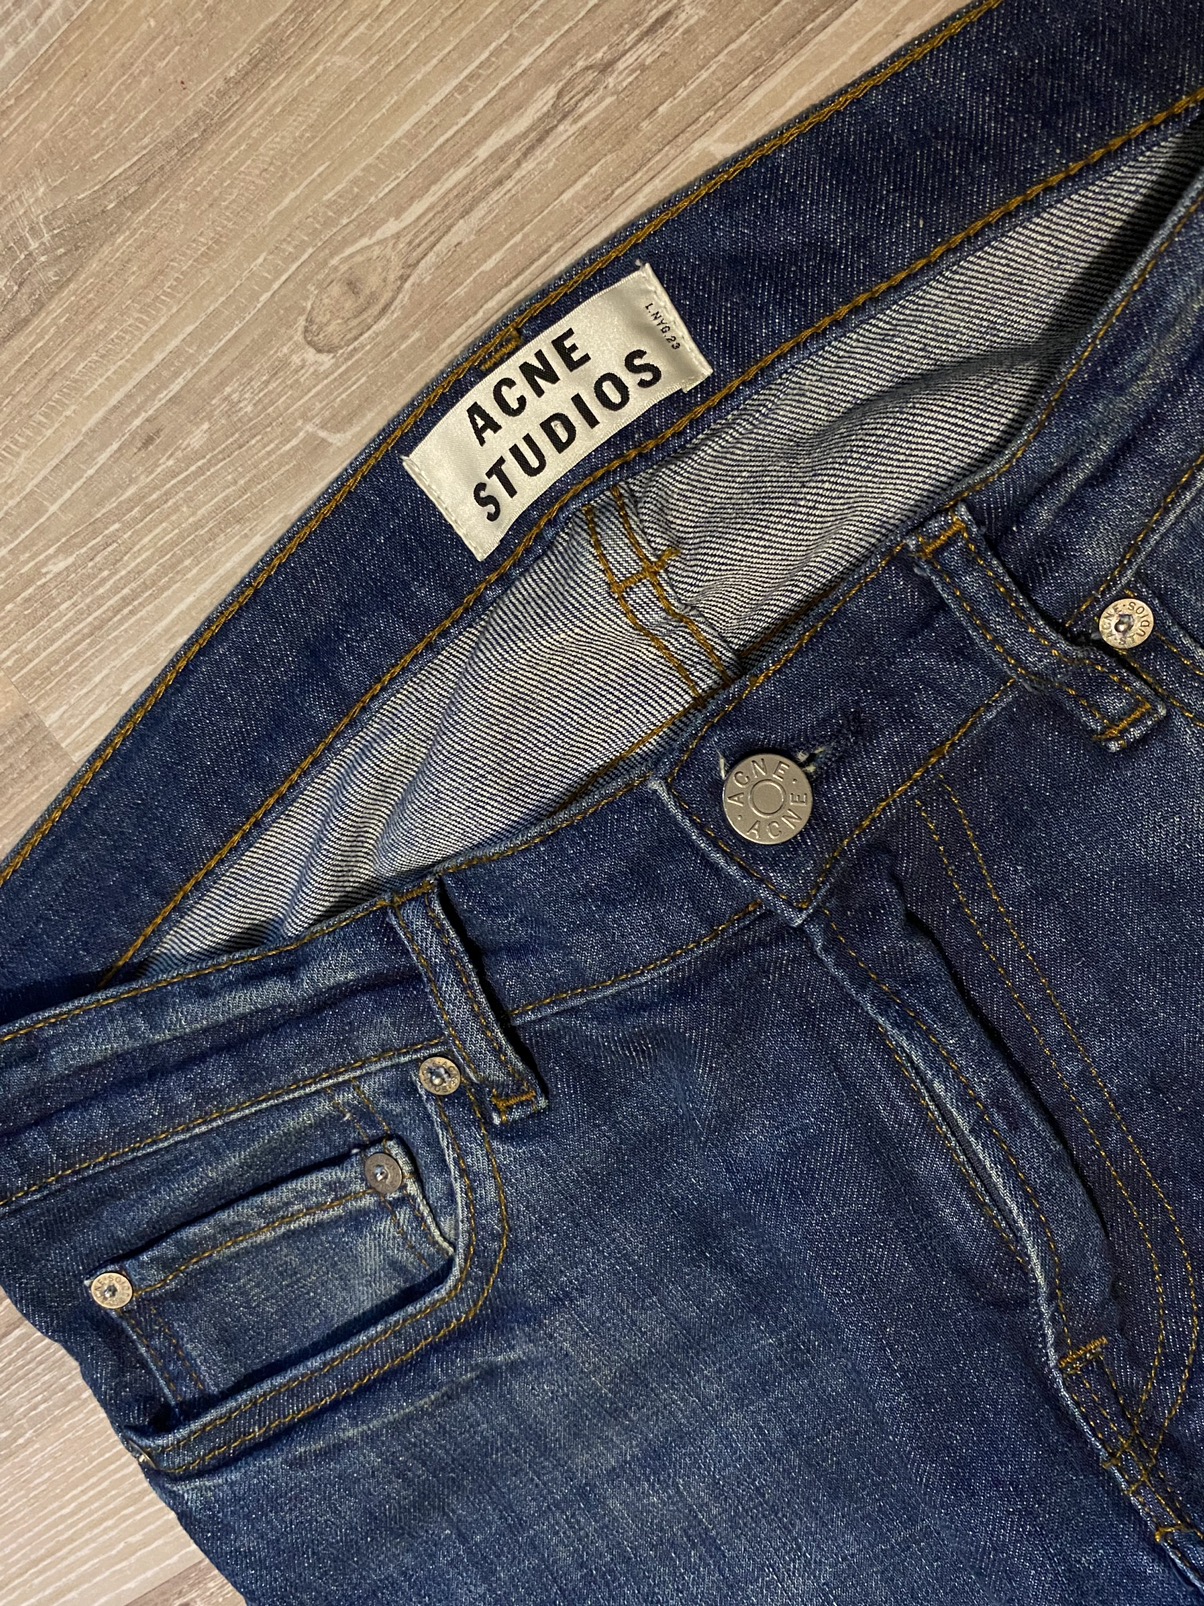 Acne Studios jeans - 2